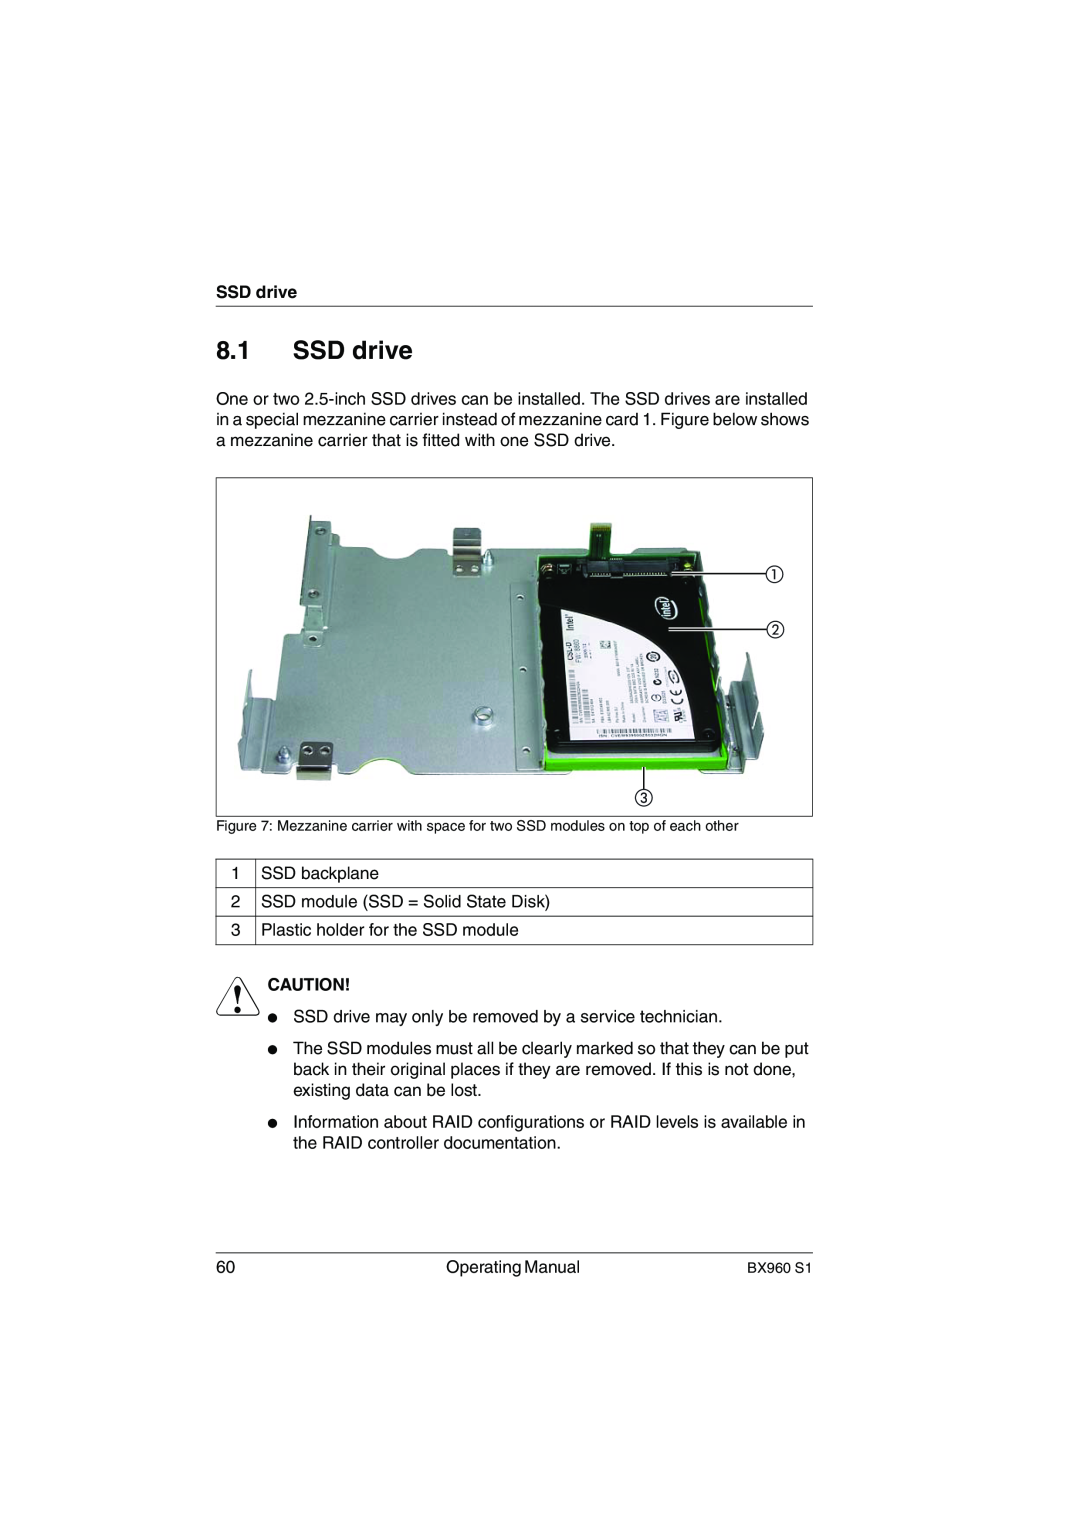 Fujitsu BX960 S1 manual SSD drive, V Caution 